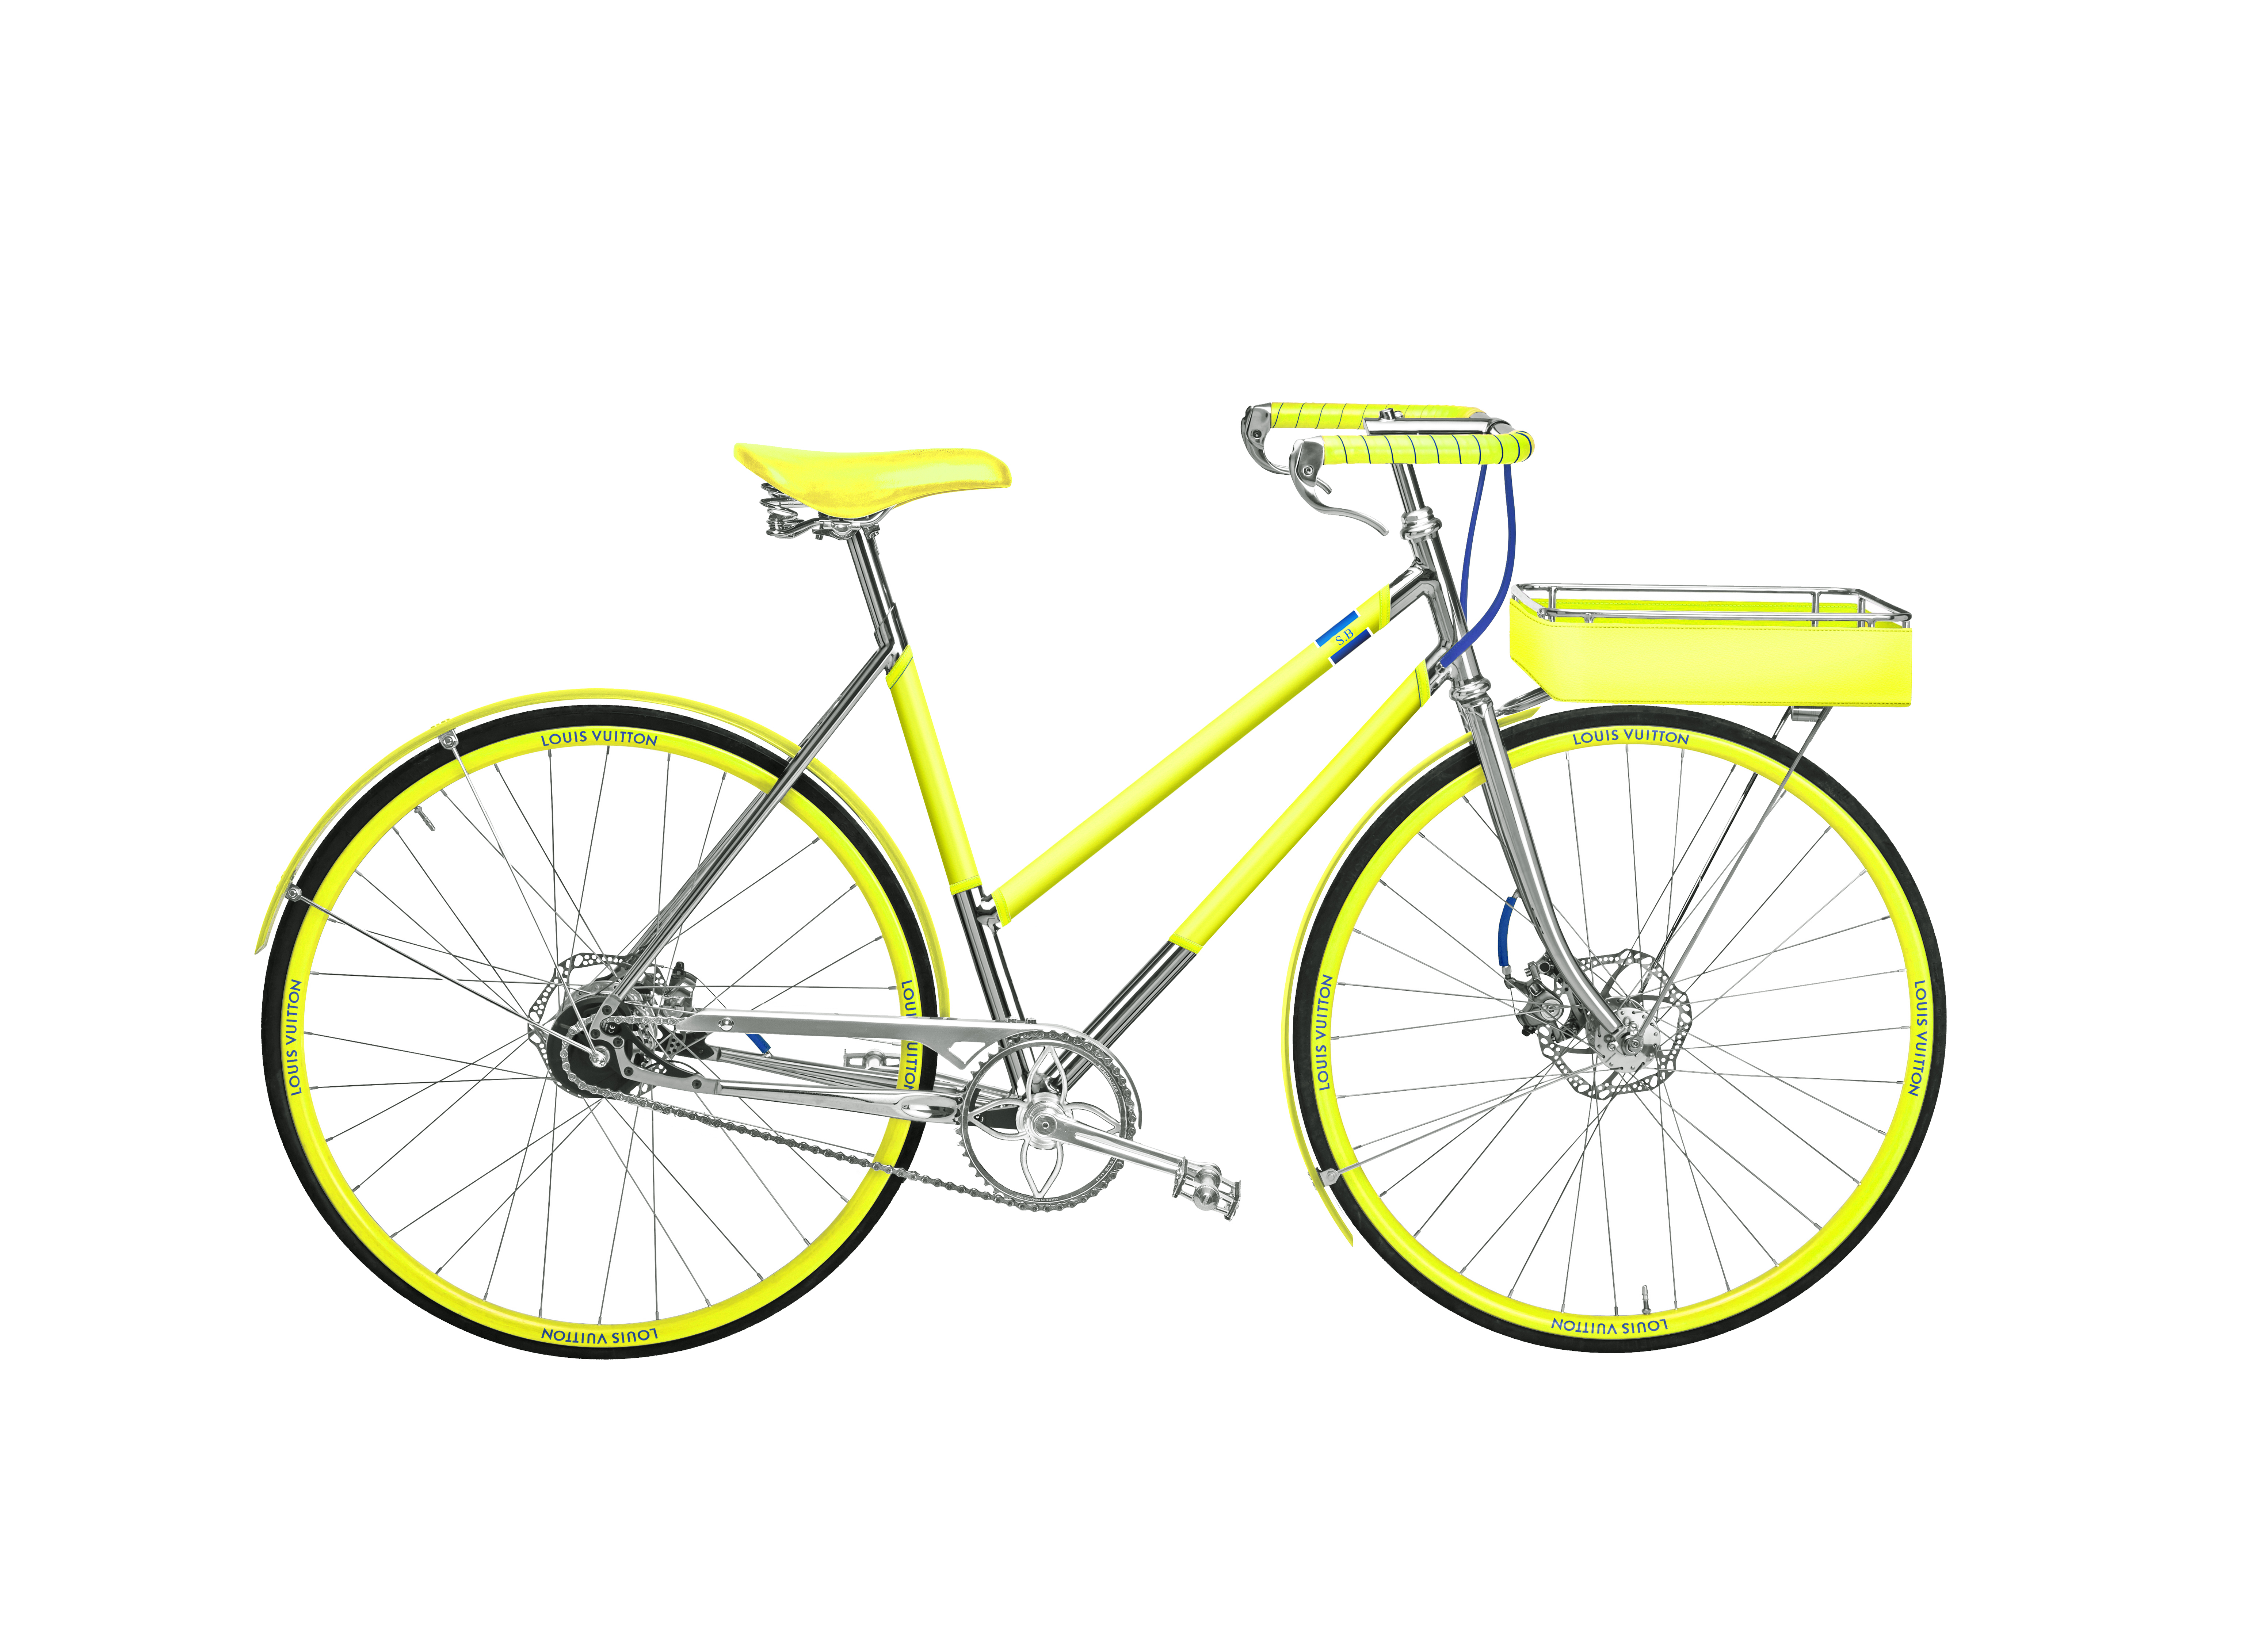 Louis Vuitton Presents LV Bike - The Blonde Salad